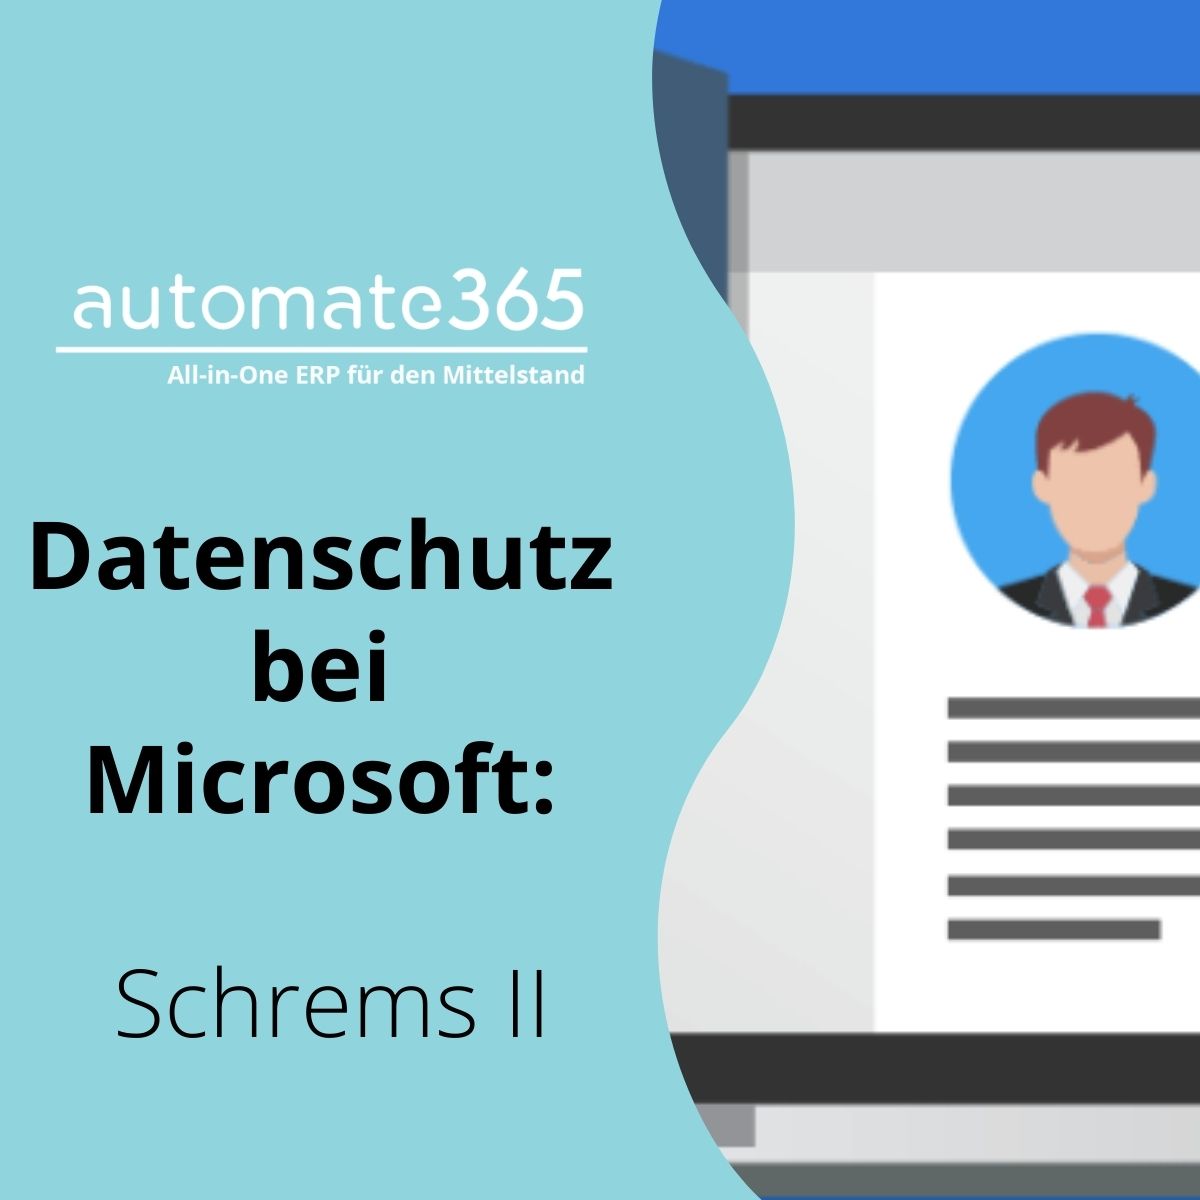 Datenschutz bei Microsoft: Schrems II